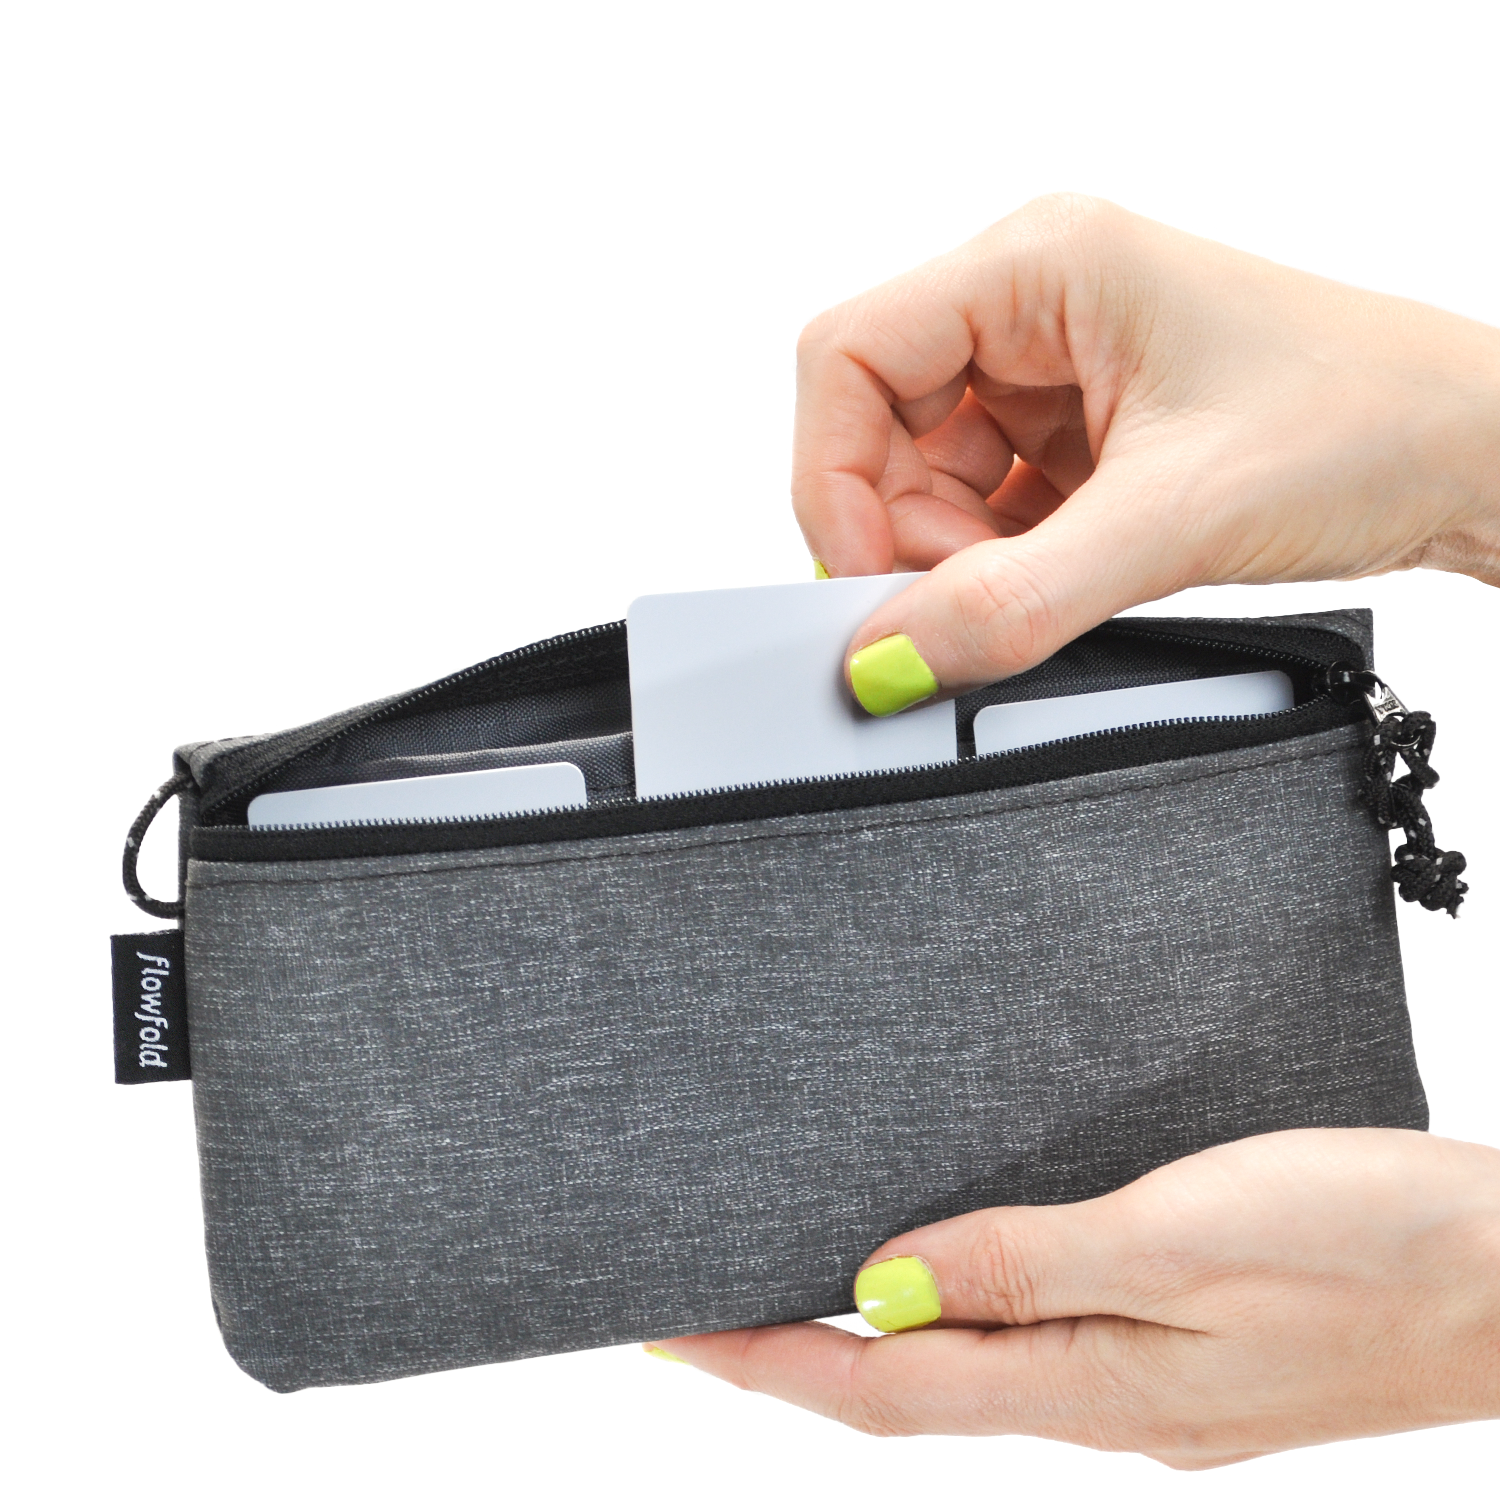 Flowfold Essentialist Zippered Mini Pouch Wallet